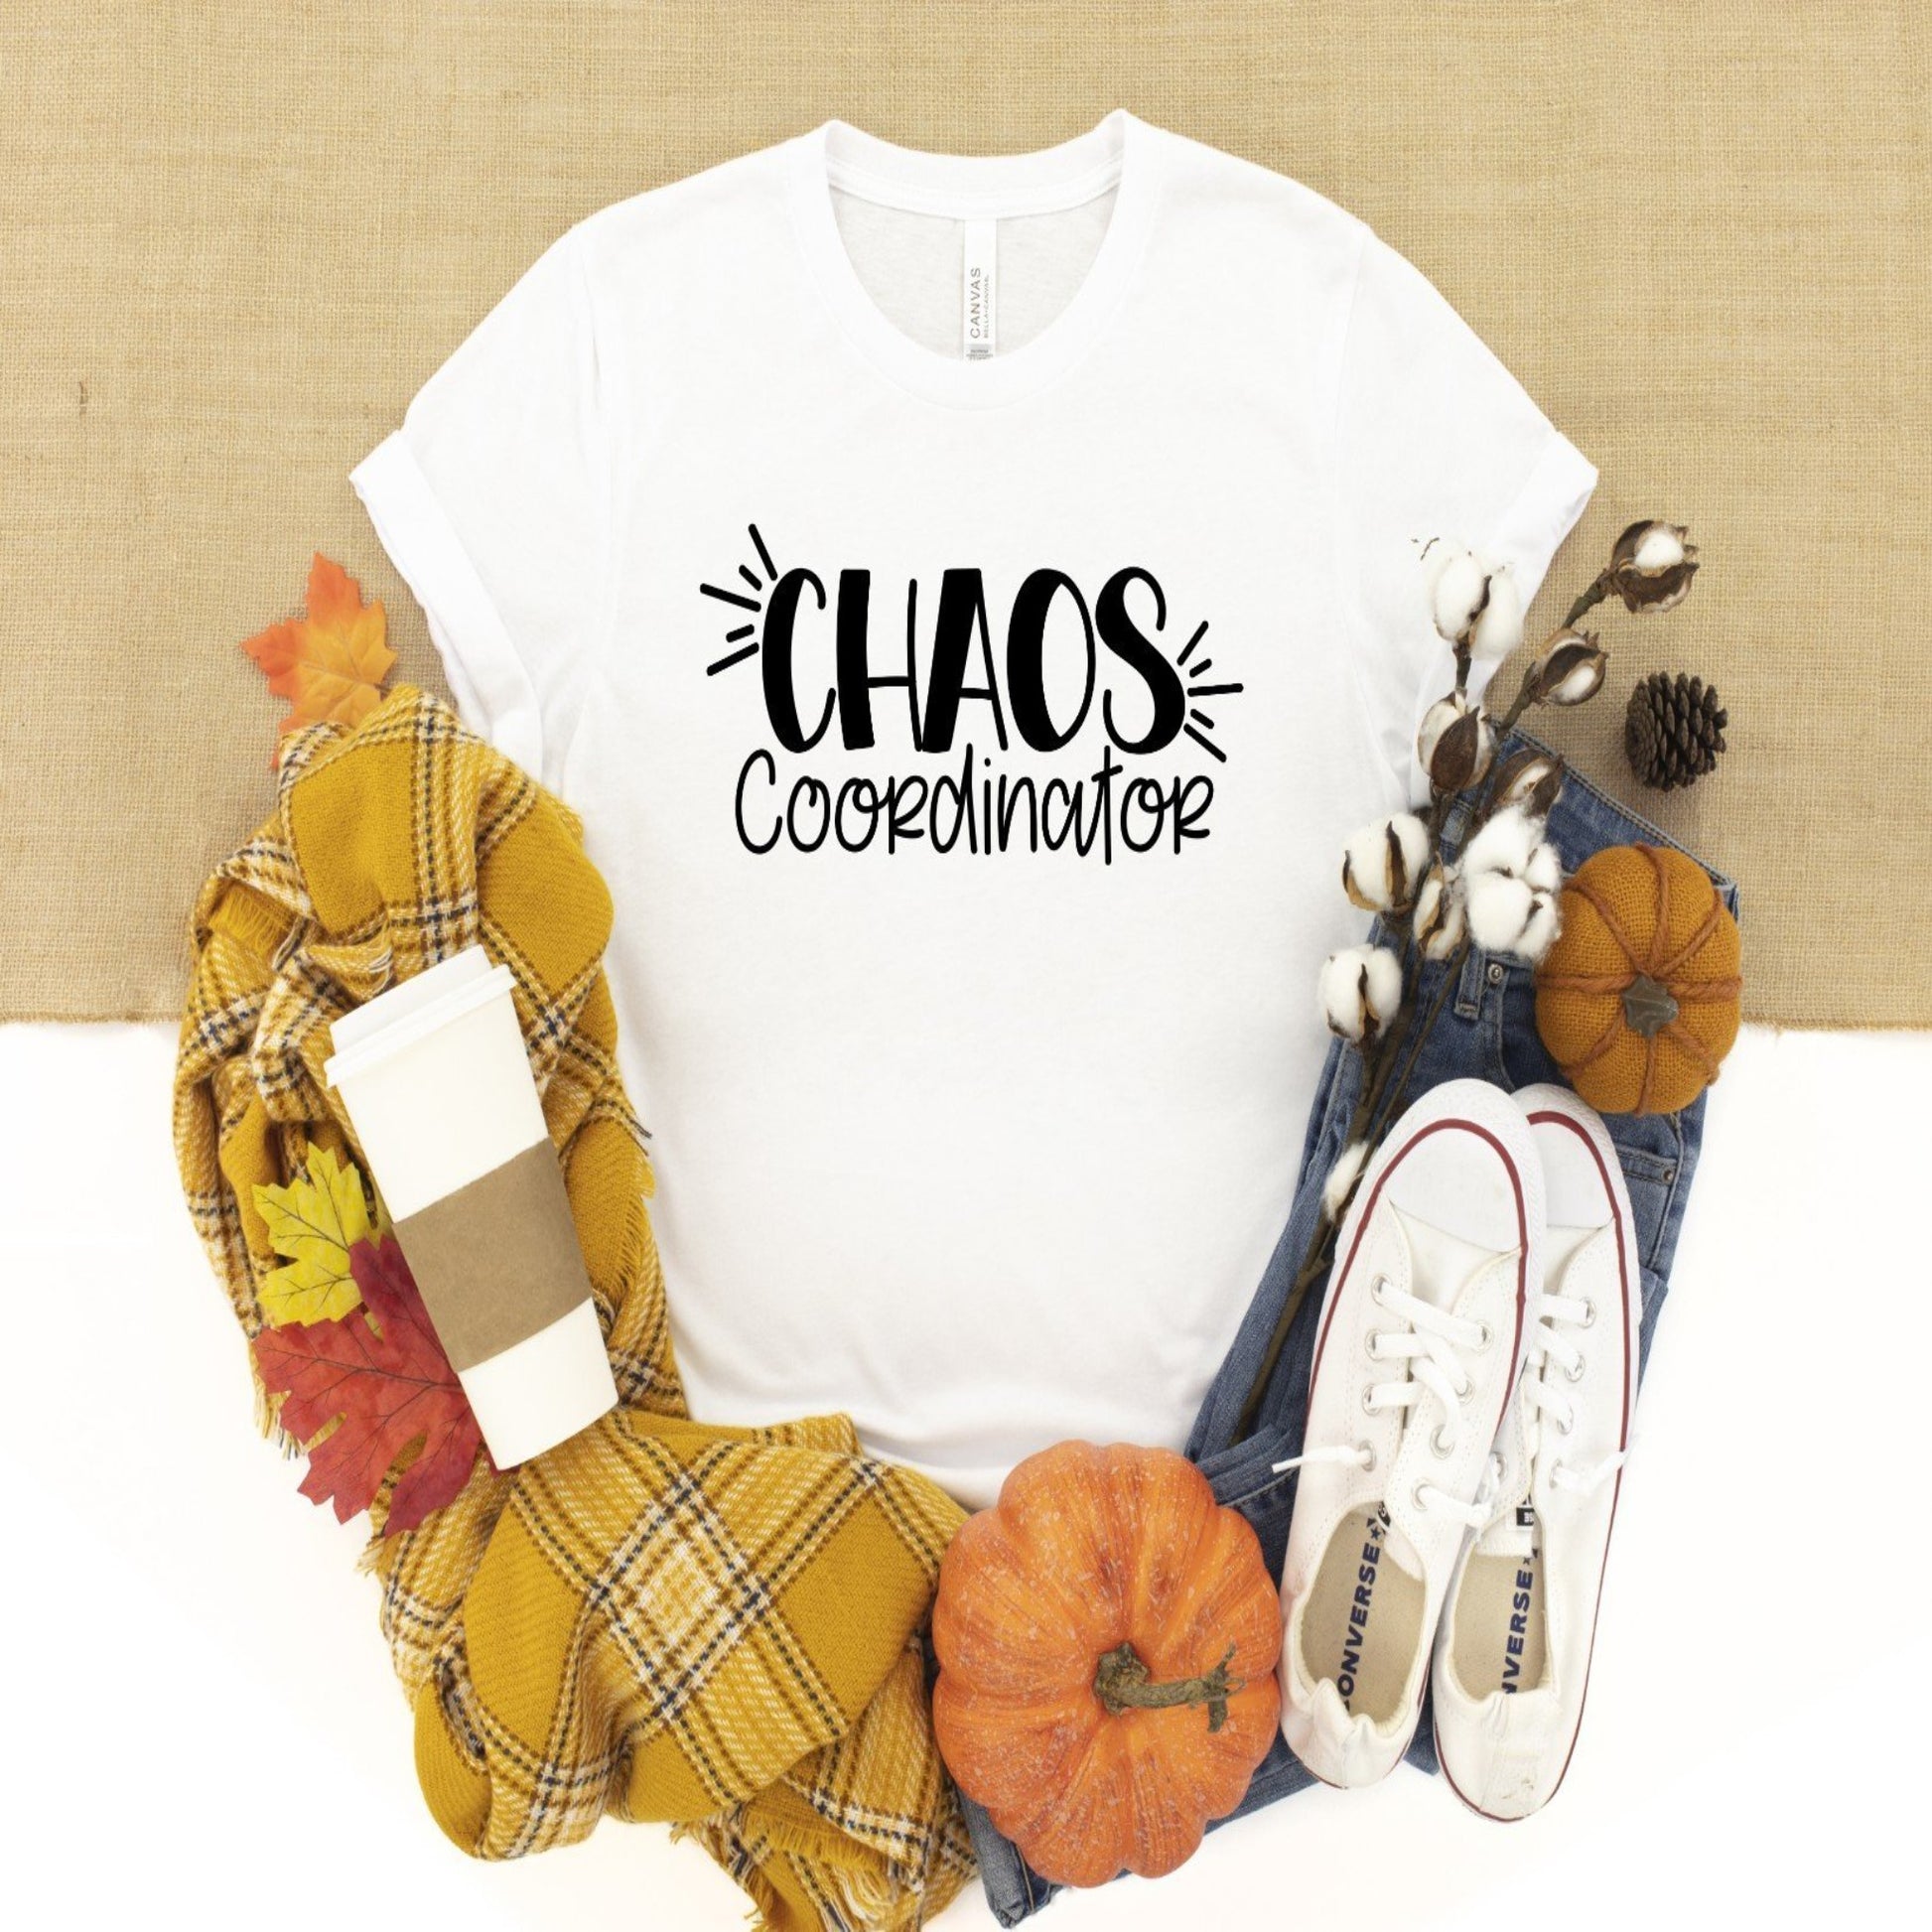 chaos_coordinator specialty tee everyday wear casual shirt comfortable tshirt